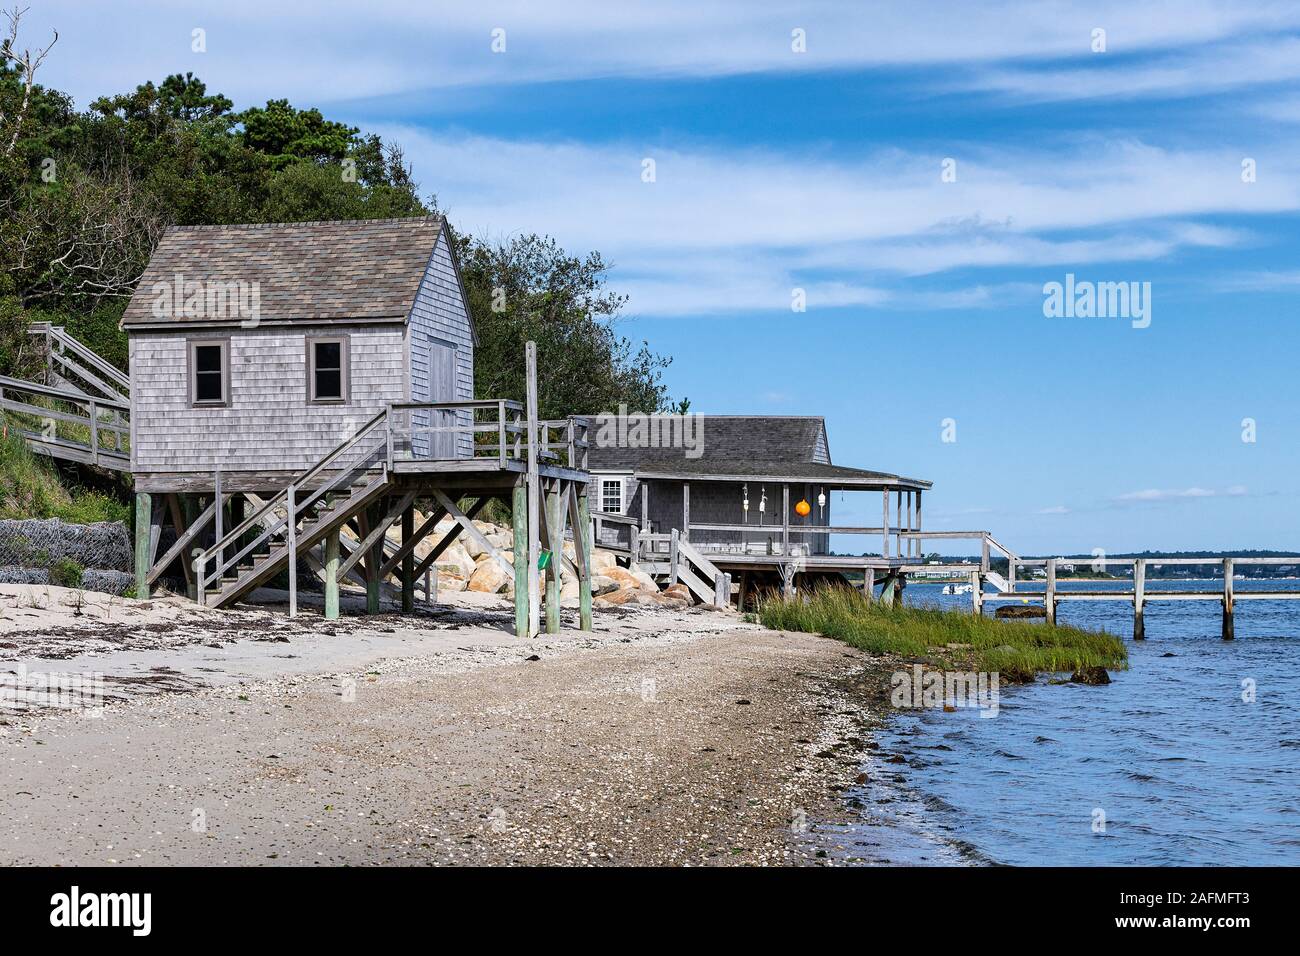 Rustic boathouse on the beach, Chatham, Cape Cod, Massachusetts, USA. Stock Photo